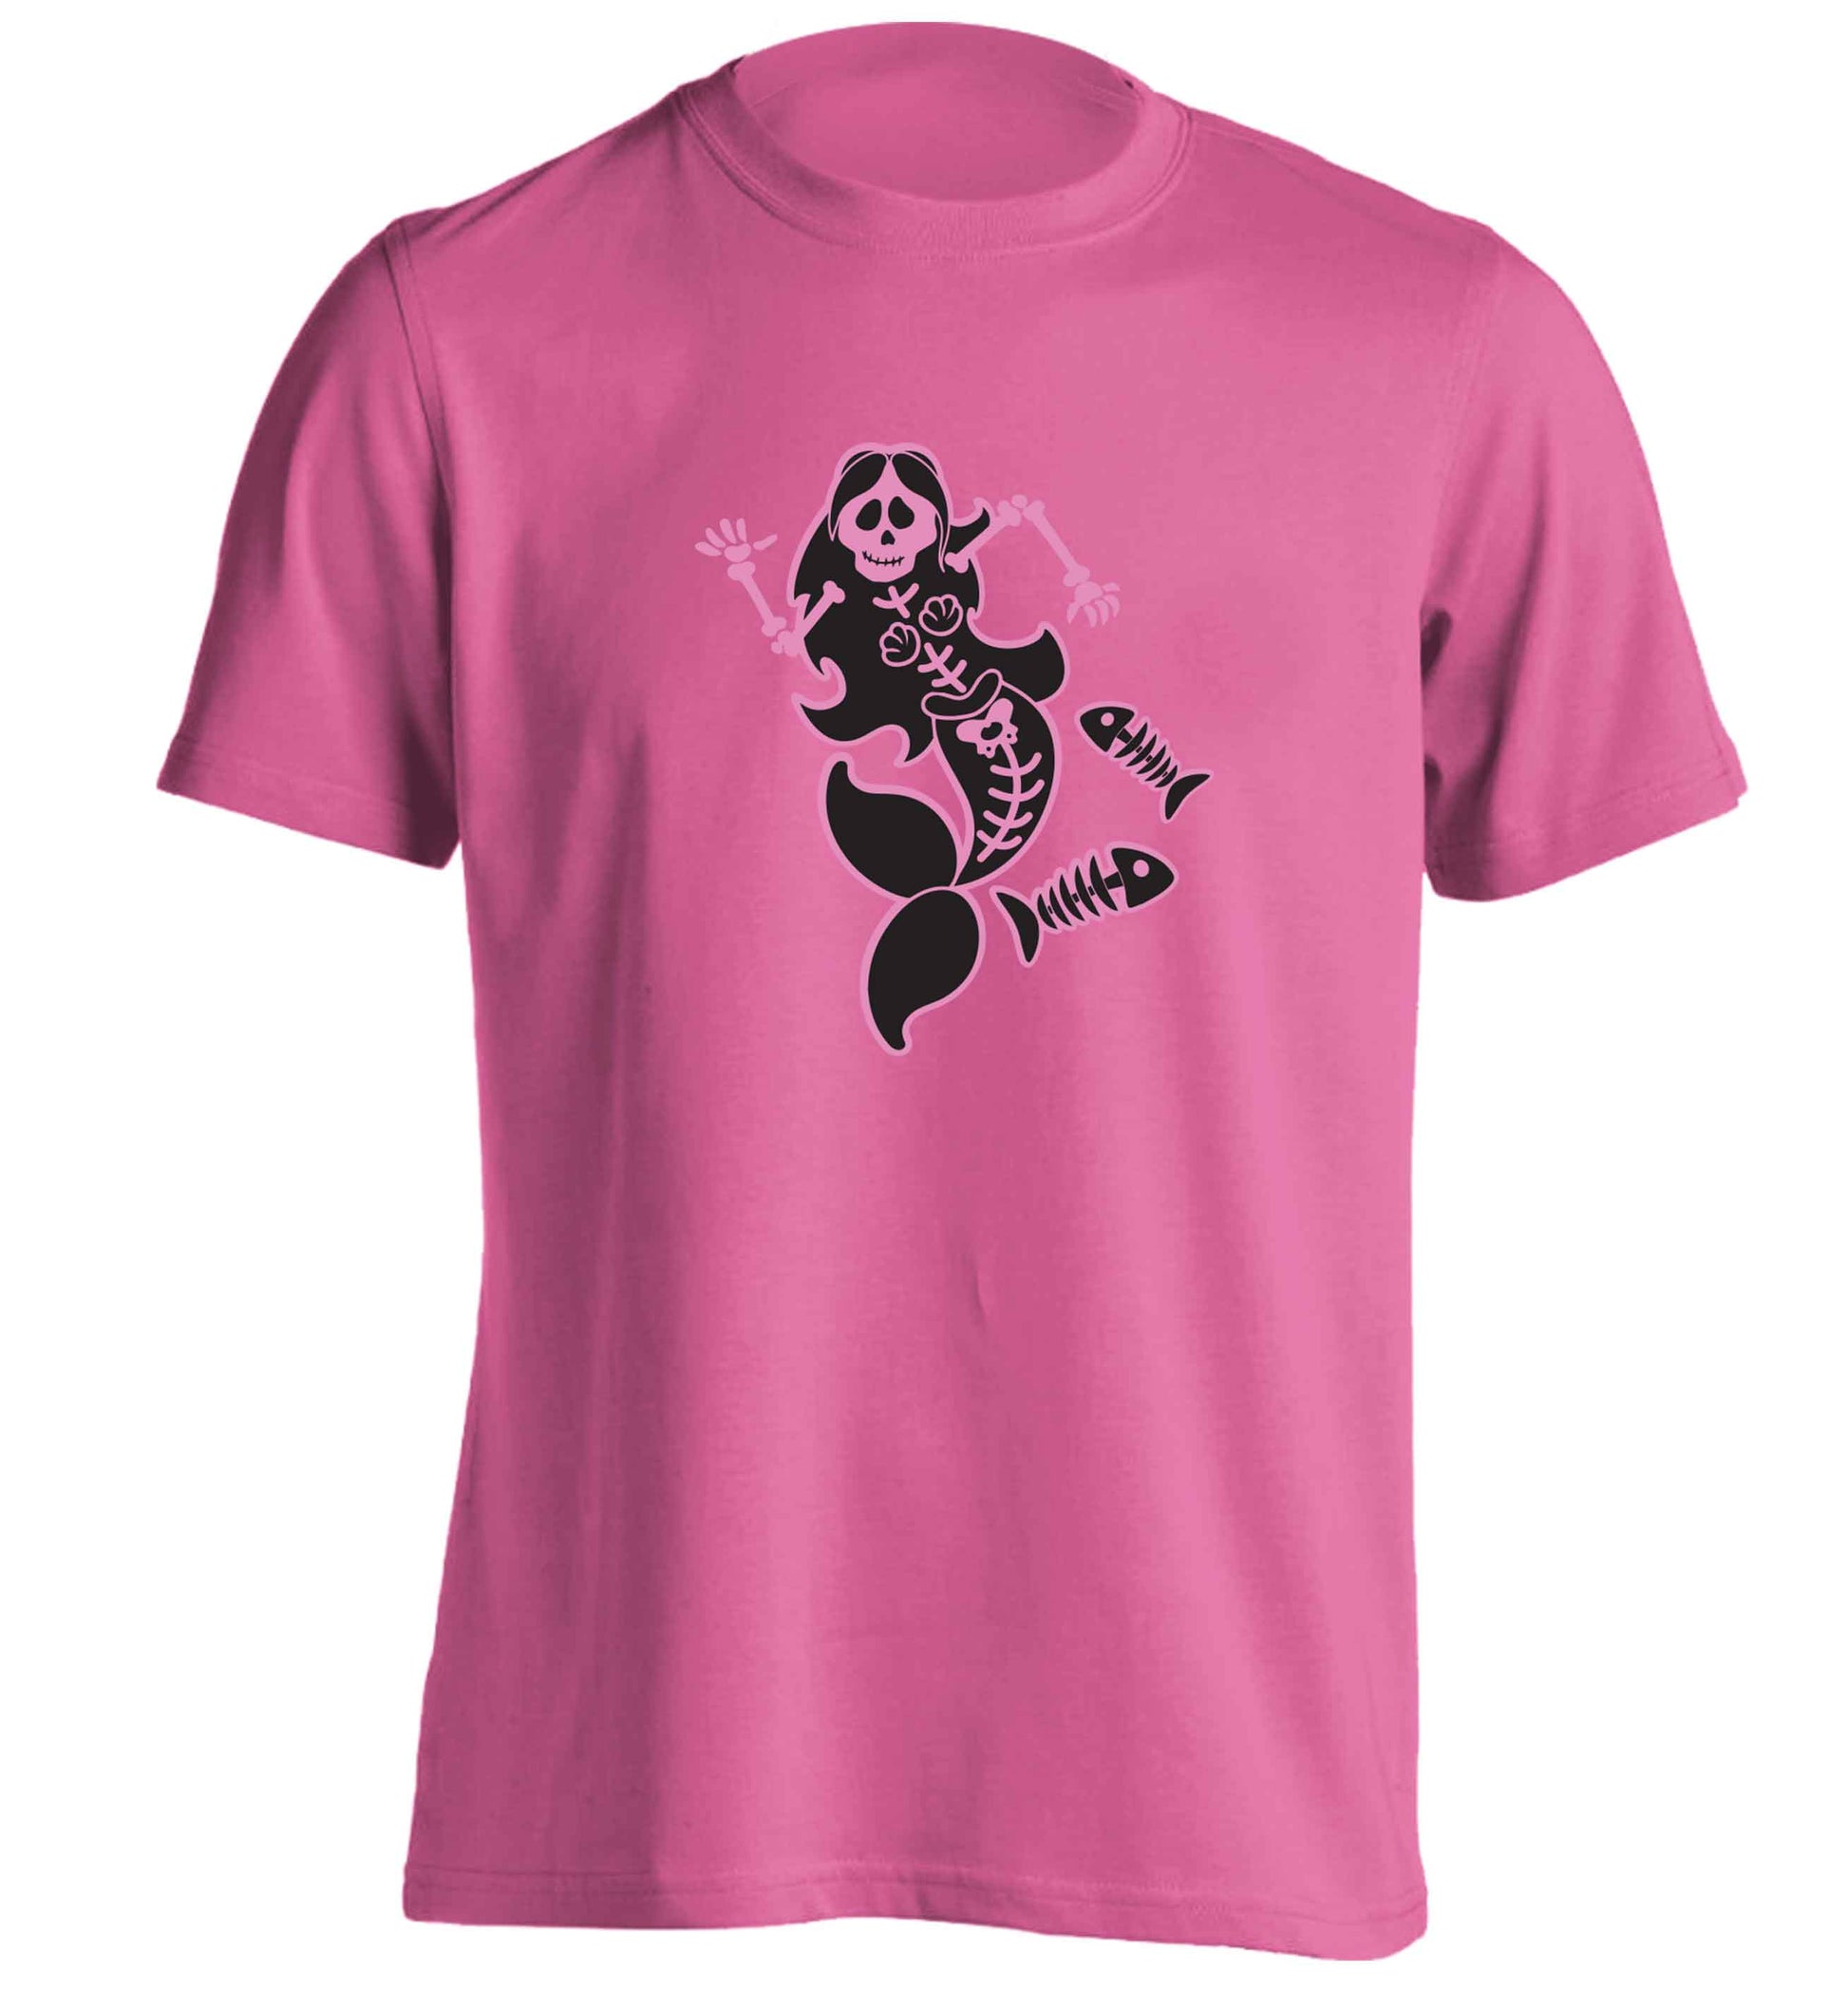 Skeleton mermaid adults unisex pink Tshirt 2XL